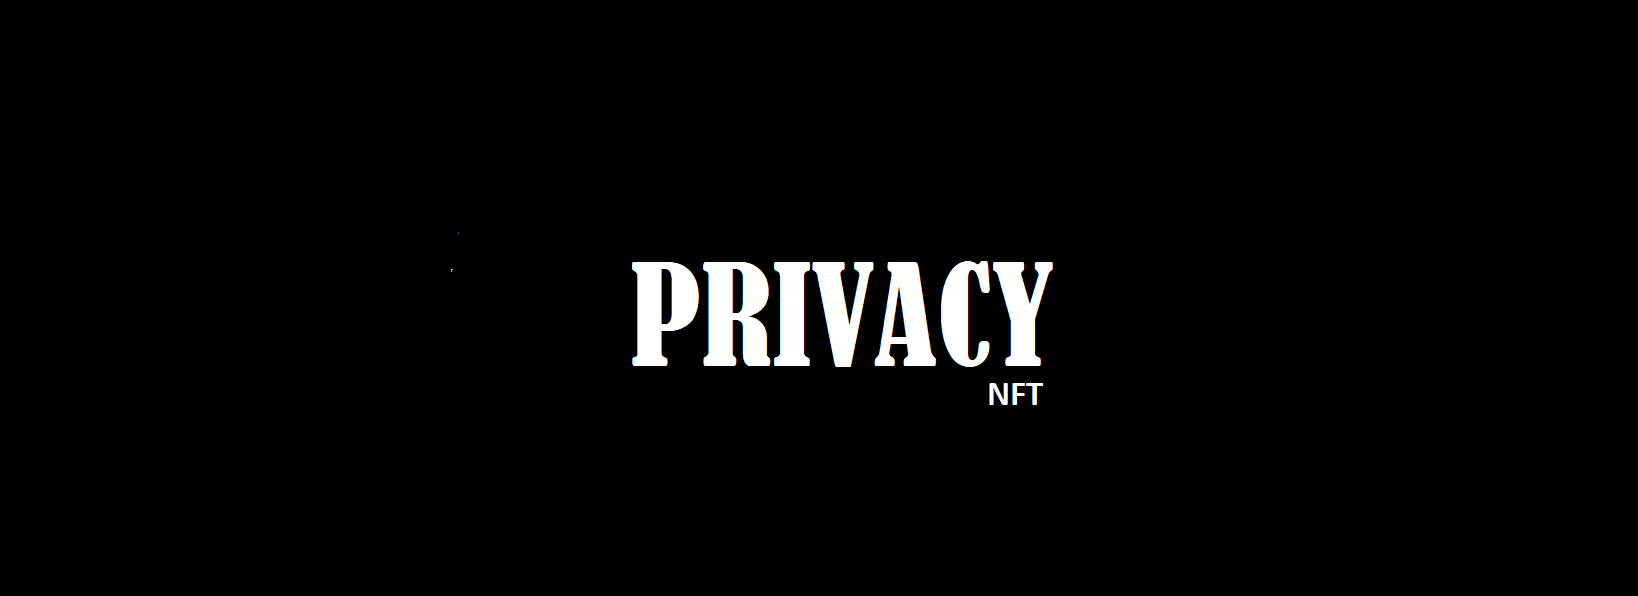 PrivacyNFT 배너